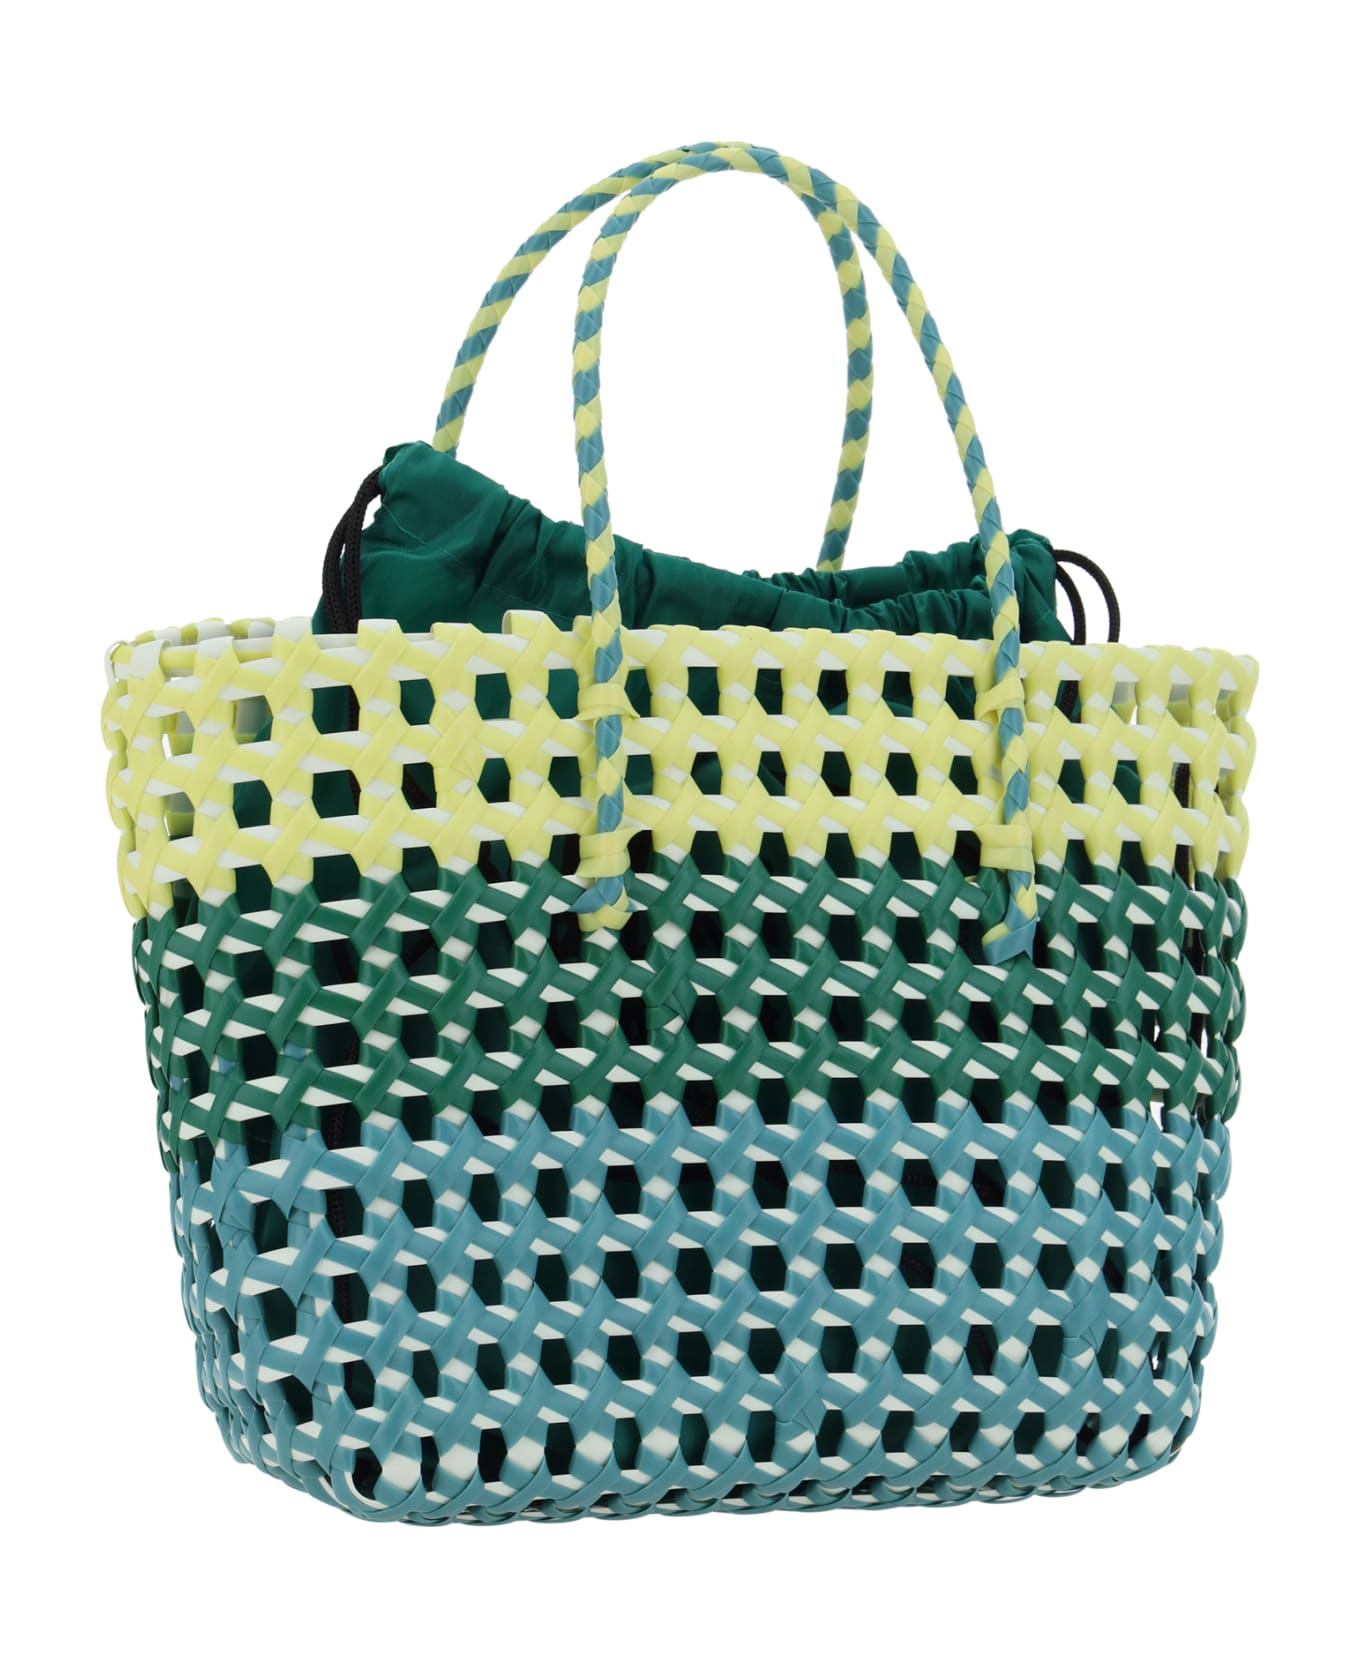 LaMilanesa Negroni Handbag - Azzurro/verde/giallo